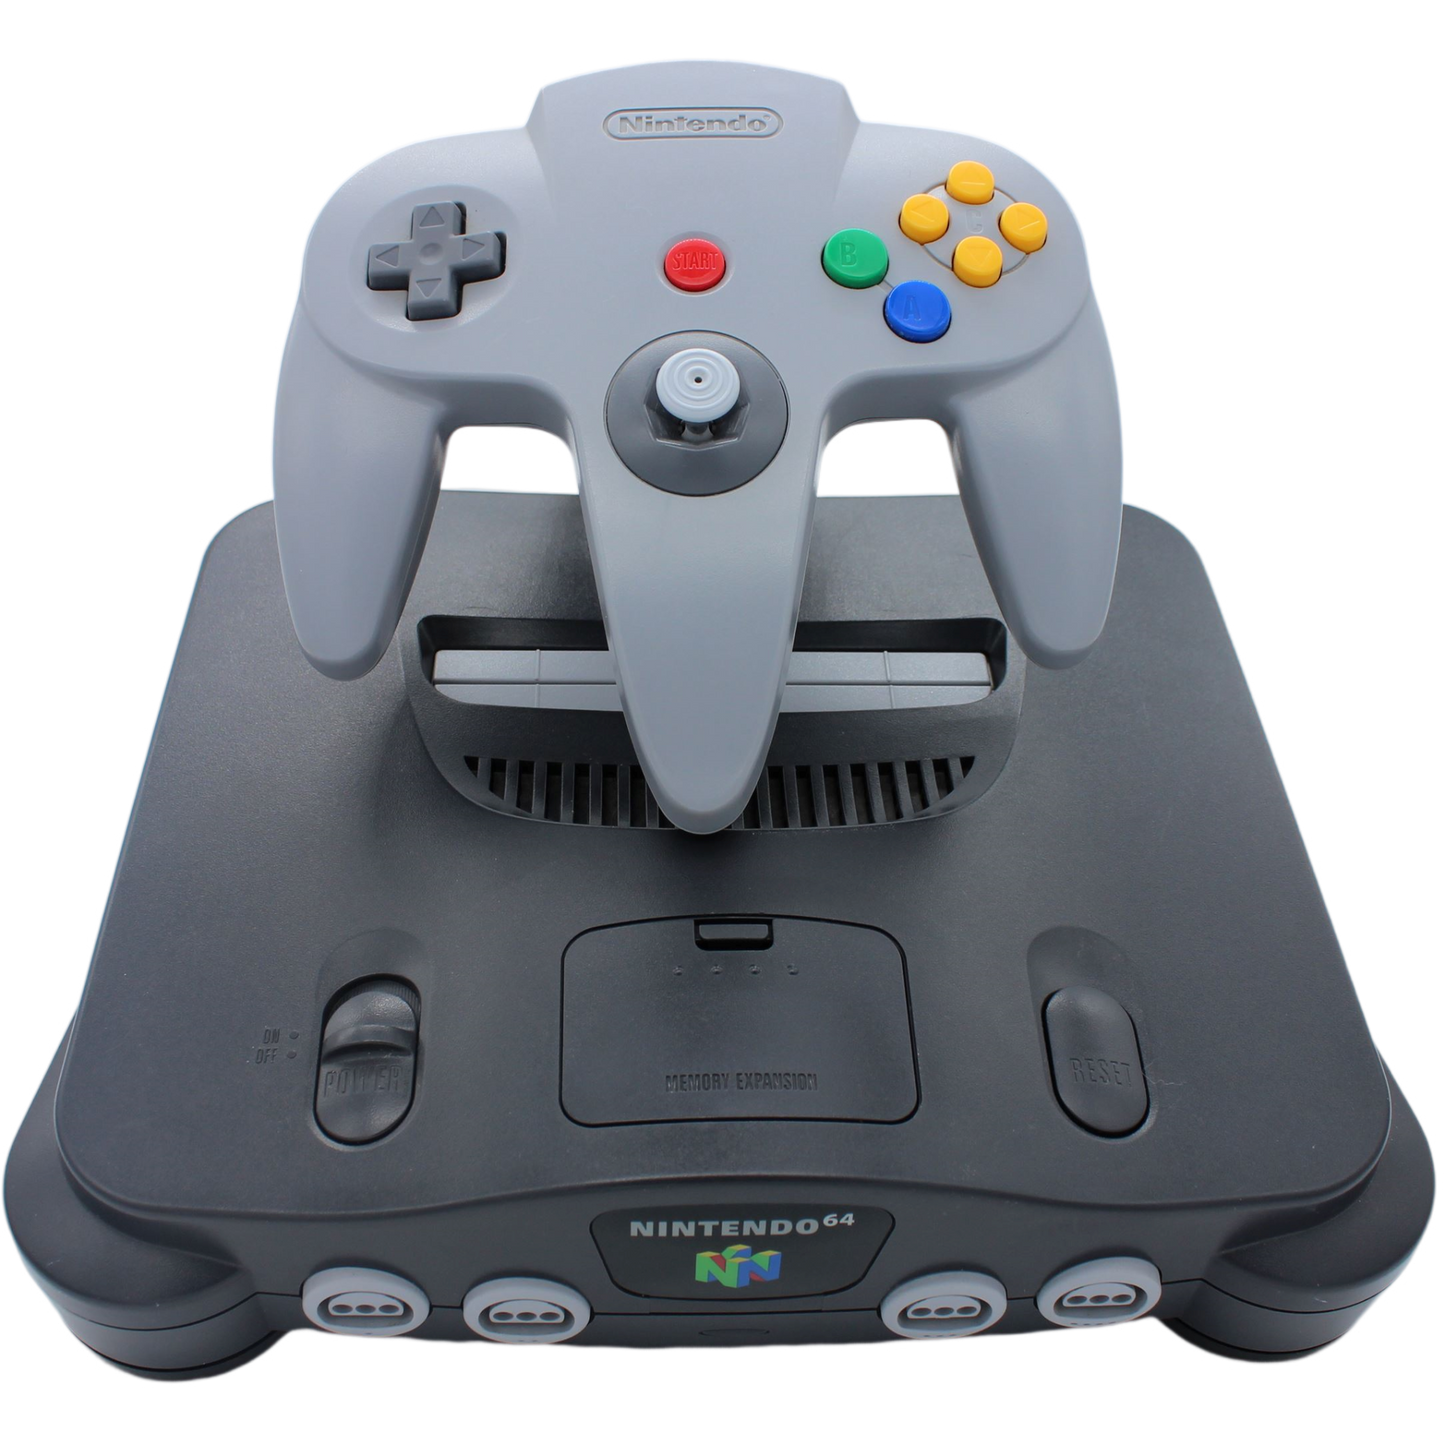 Nintendo 64 (N64) Single-Player Bundle